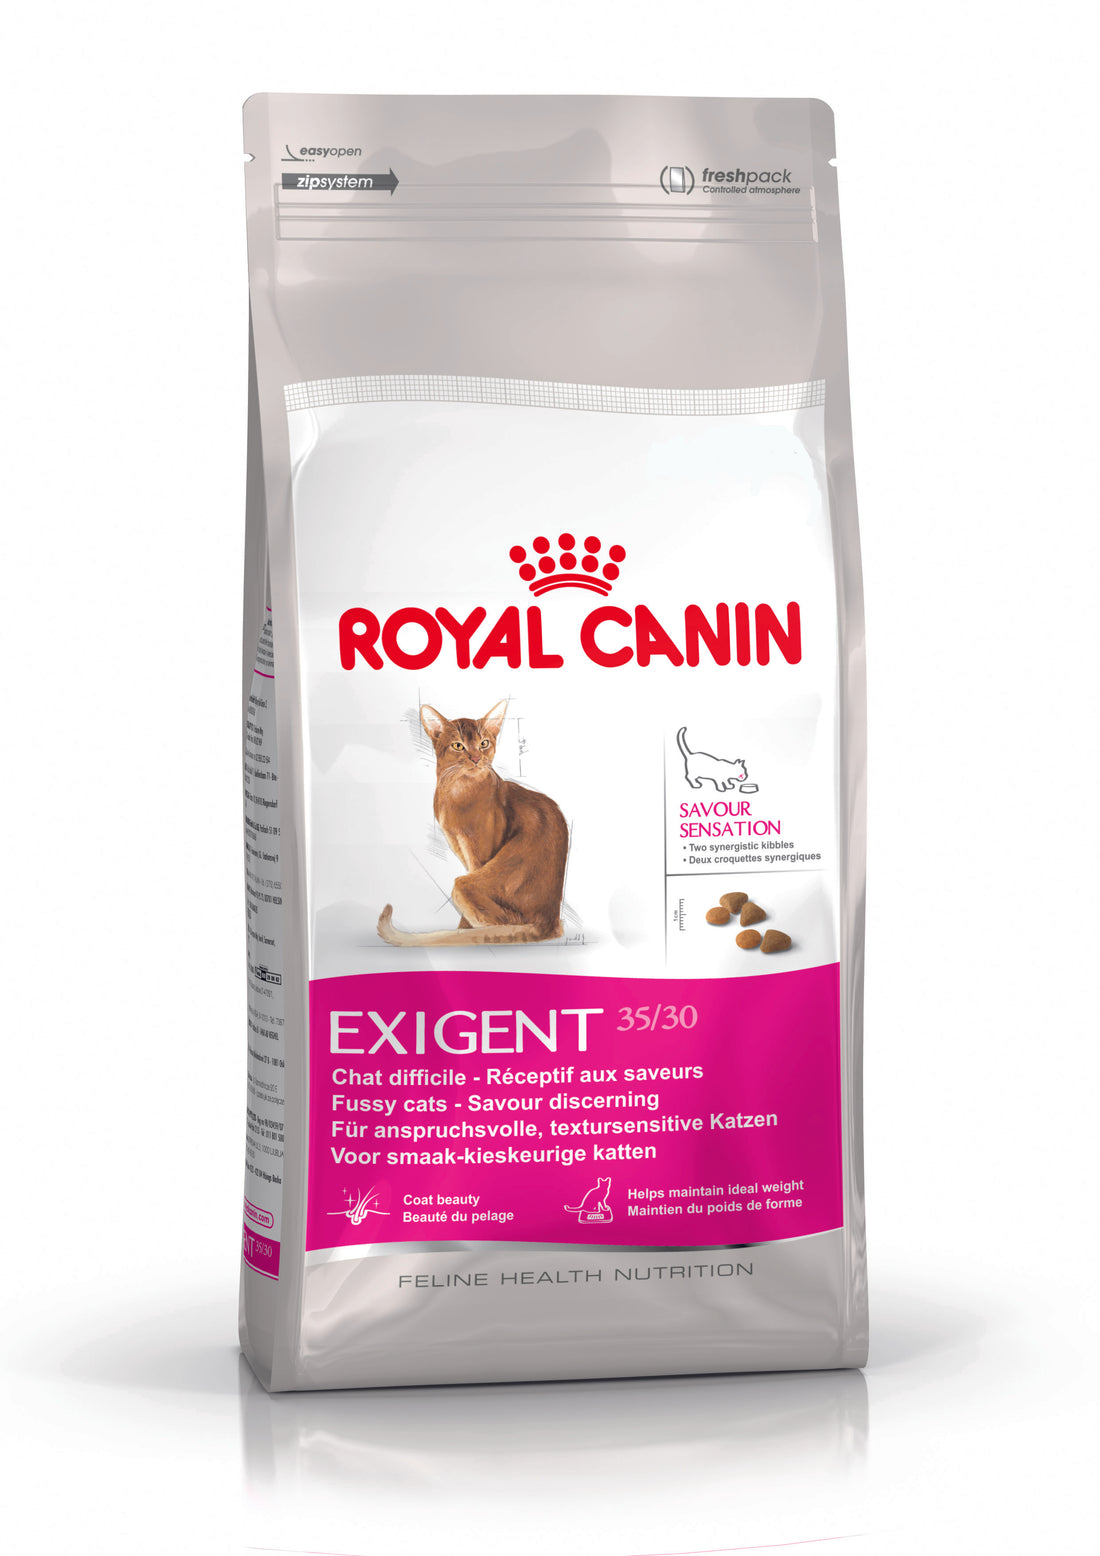 R/Canin-Exigent 35/30 Savour Sensation Cat Food 2Kg